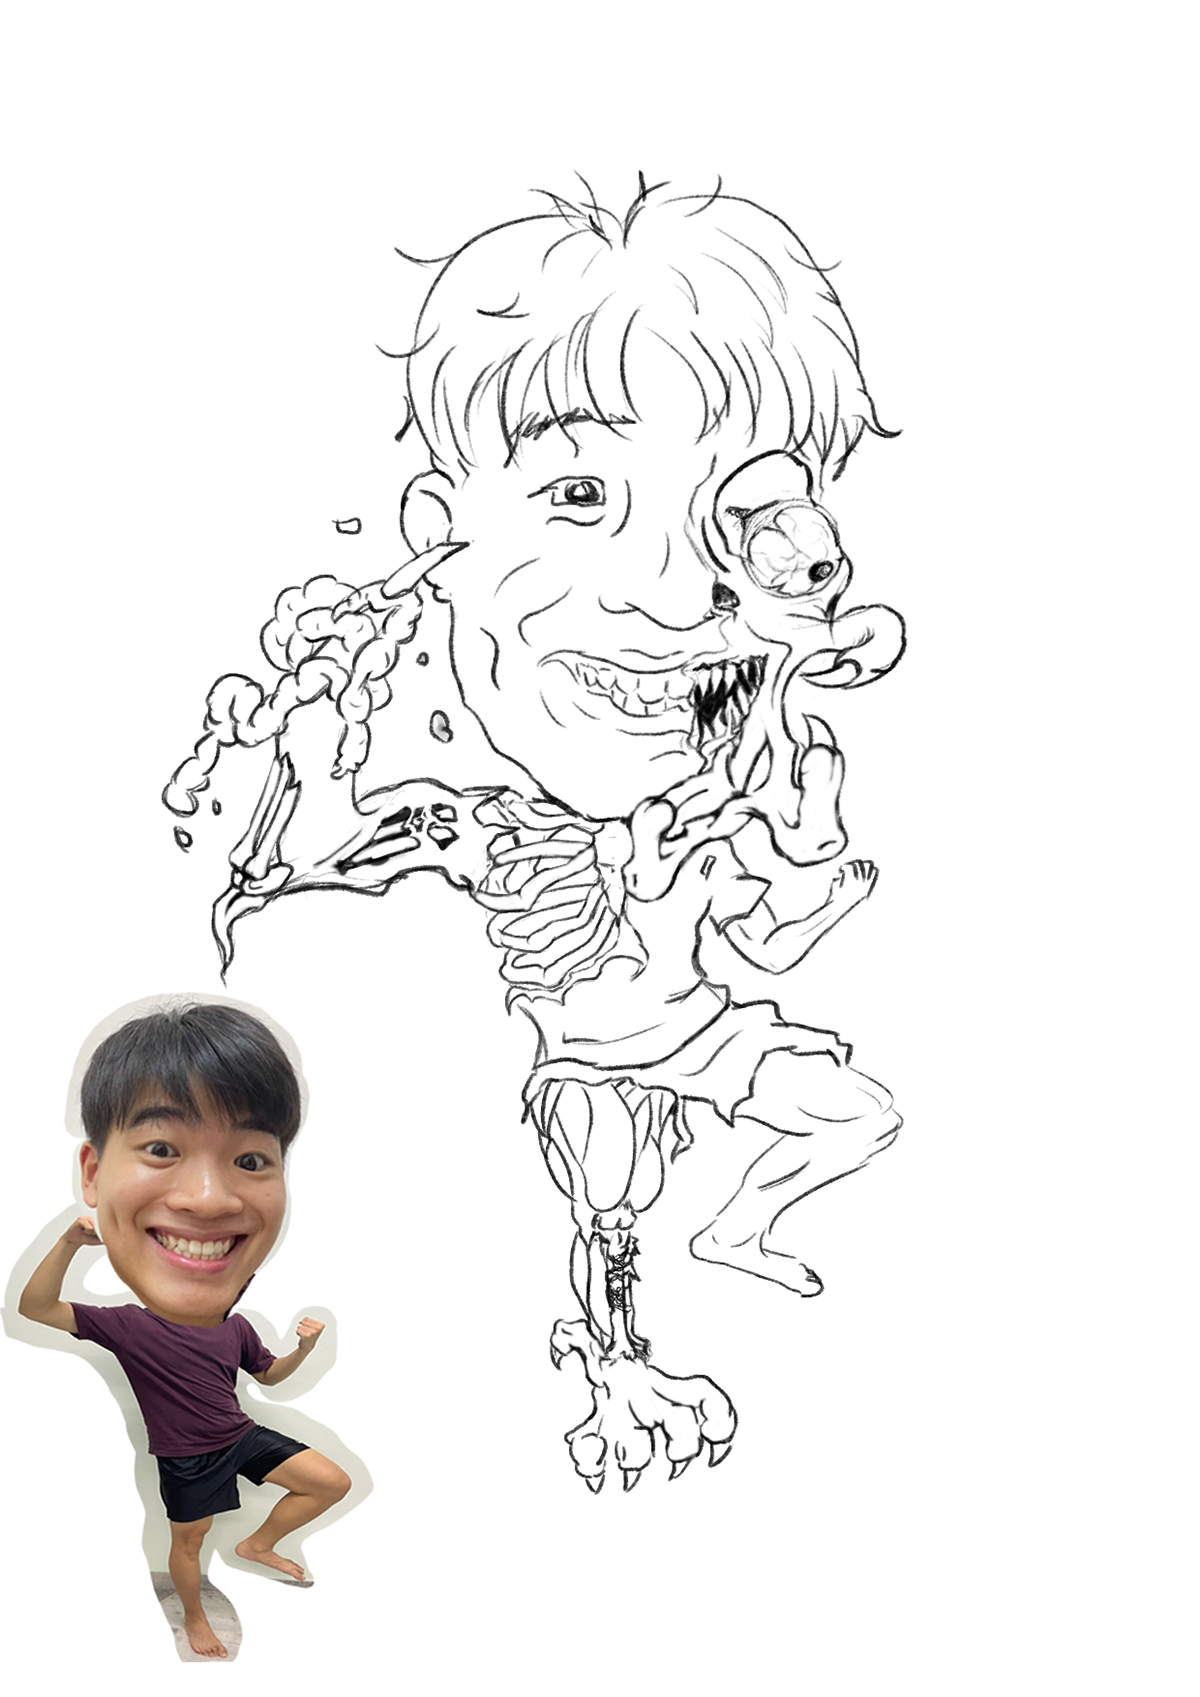 human face cartoon caricature   ILLUSTRATION  Digital Art  Character design  digital illustration арт Drawing  sketch